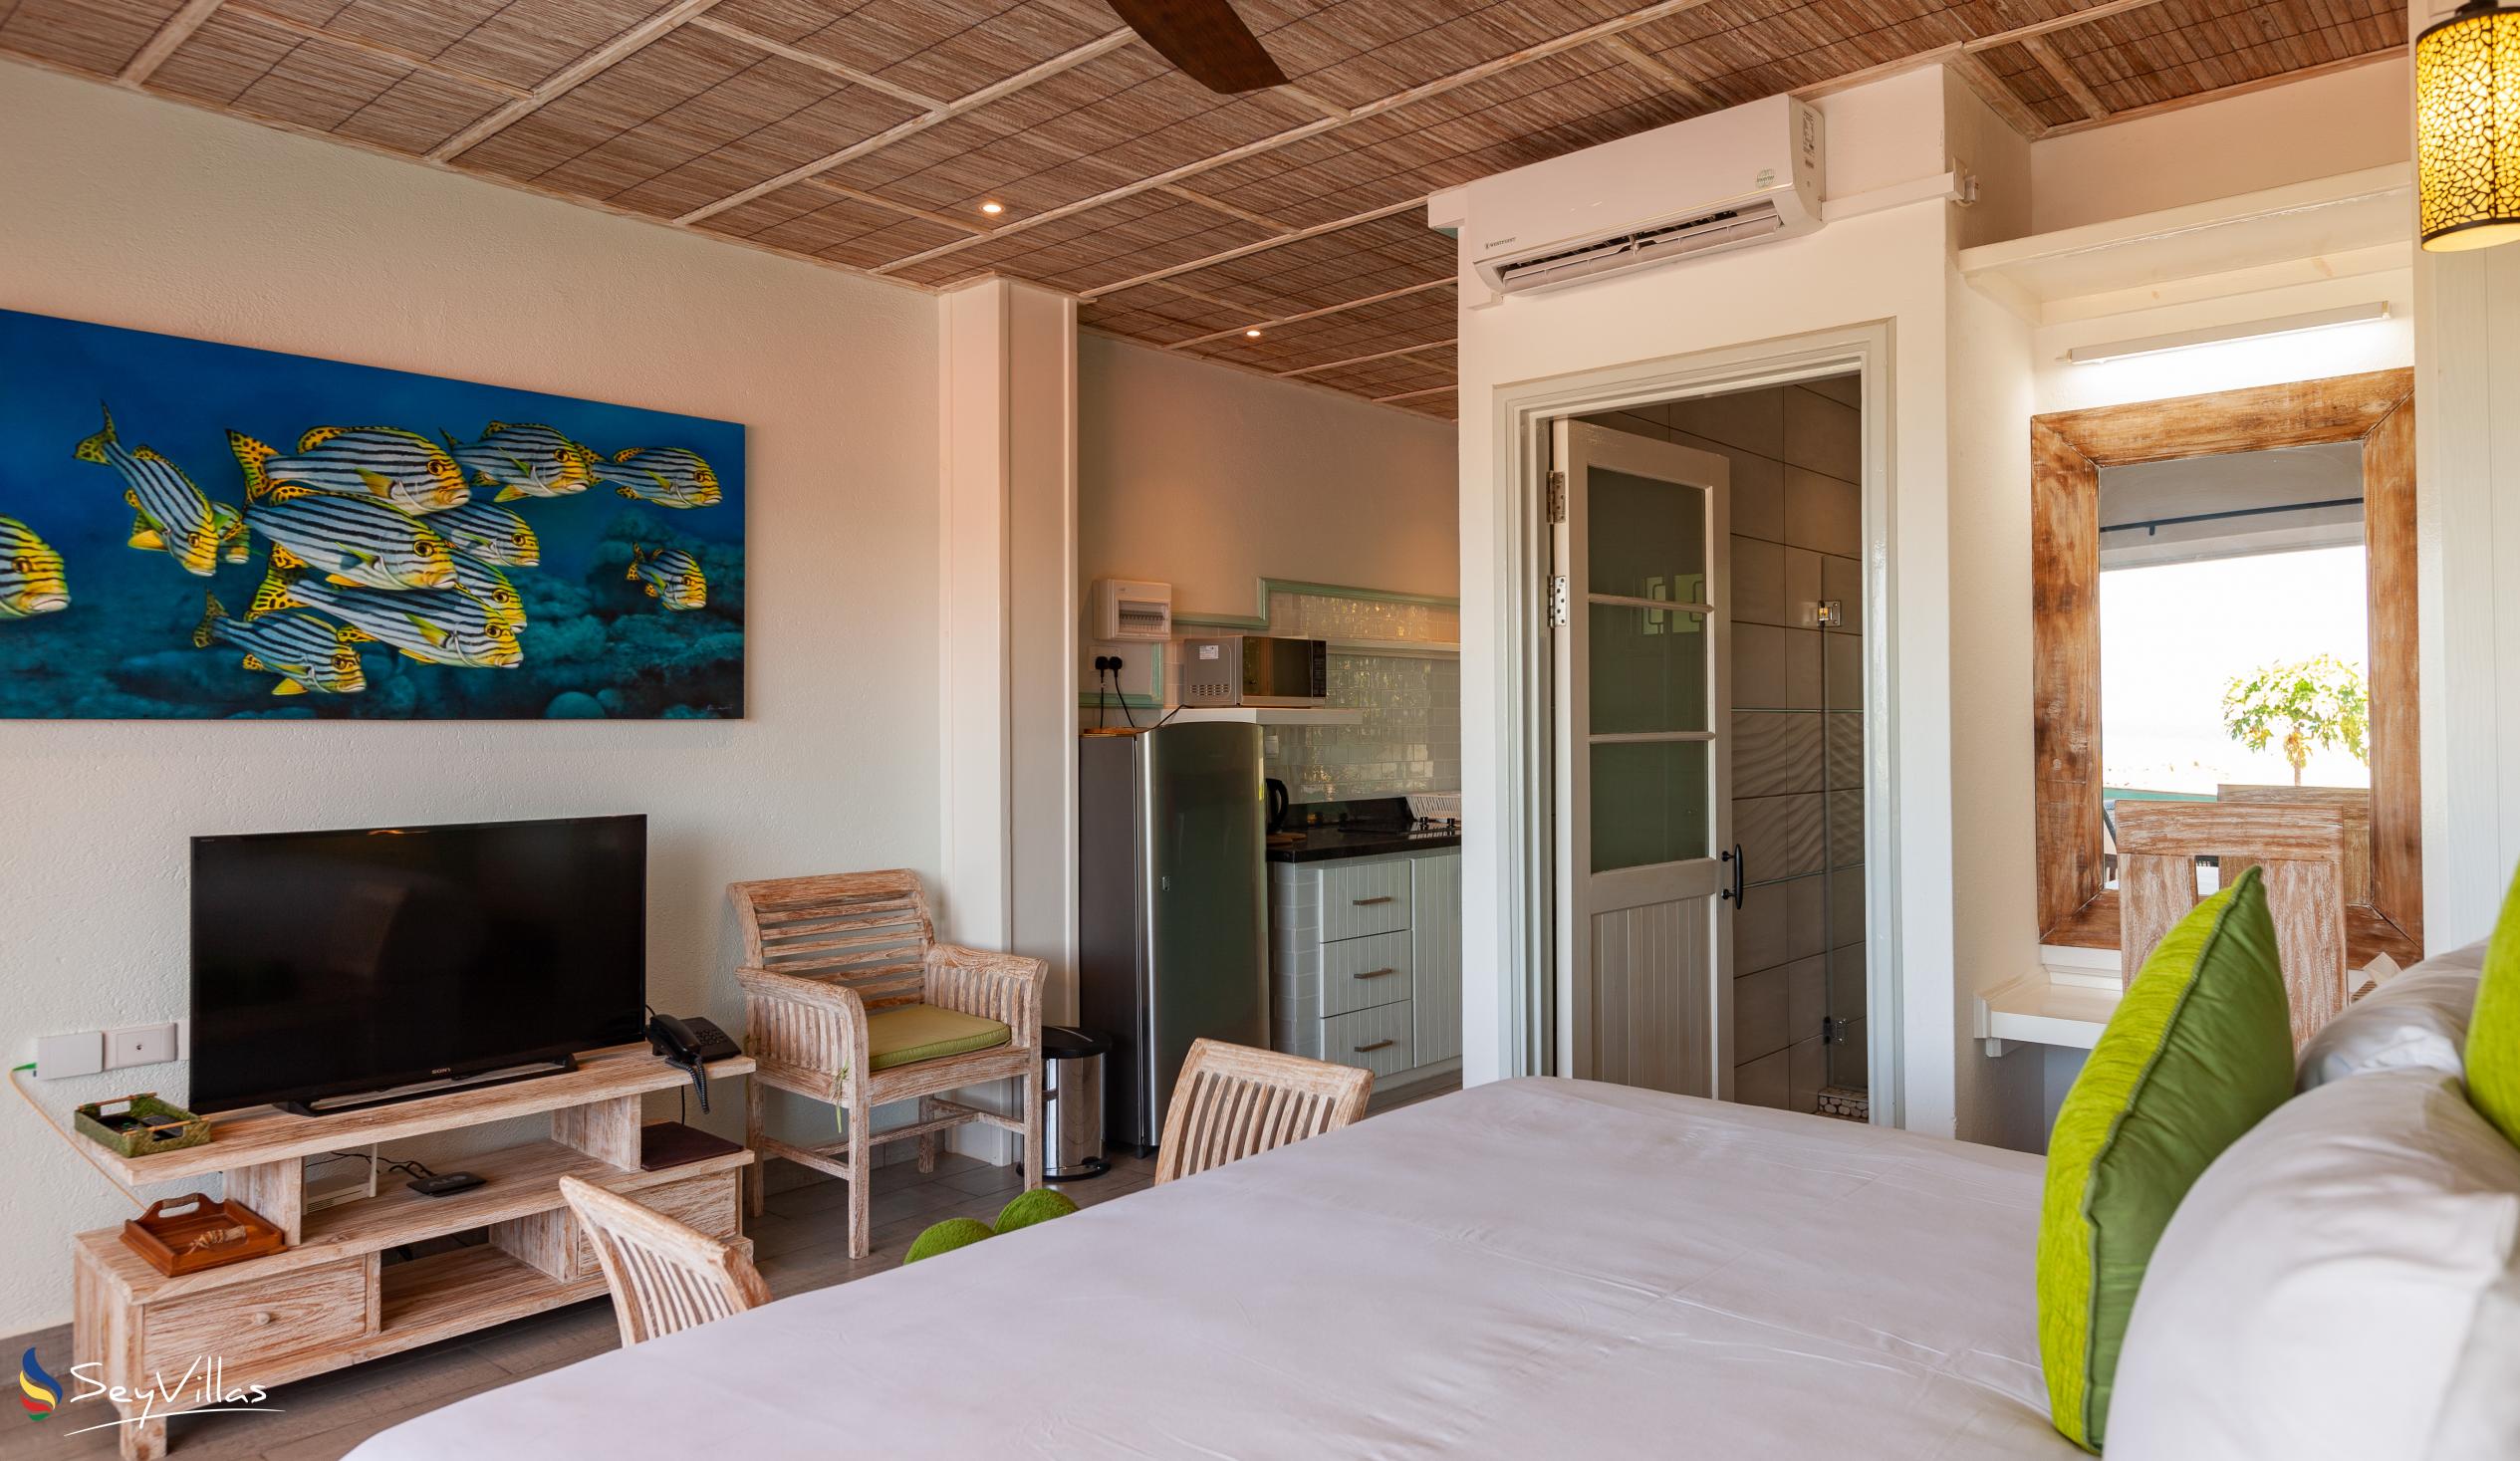 Photo 99: La Digue Self Catering - Studio Apartment Sea View - La Digue (Seychelles)